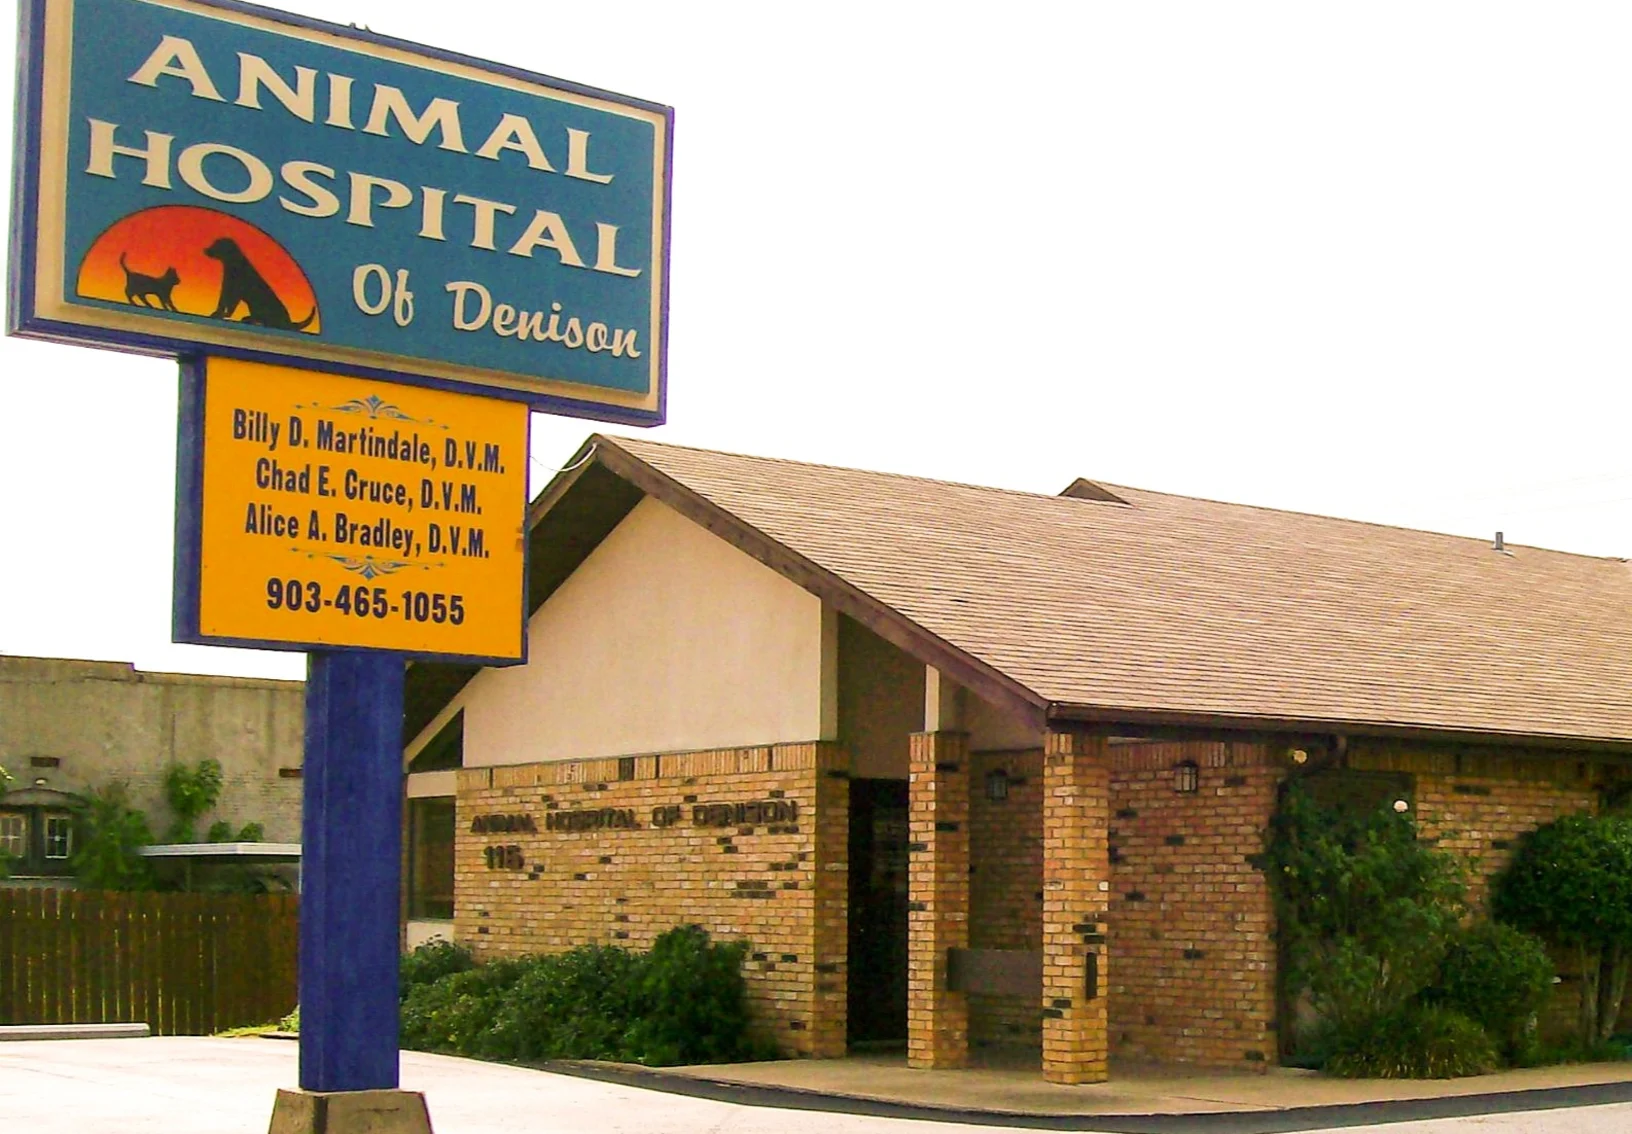 Animal Hospital of Denison Exterior Building